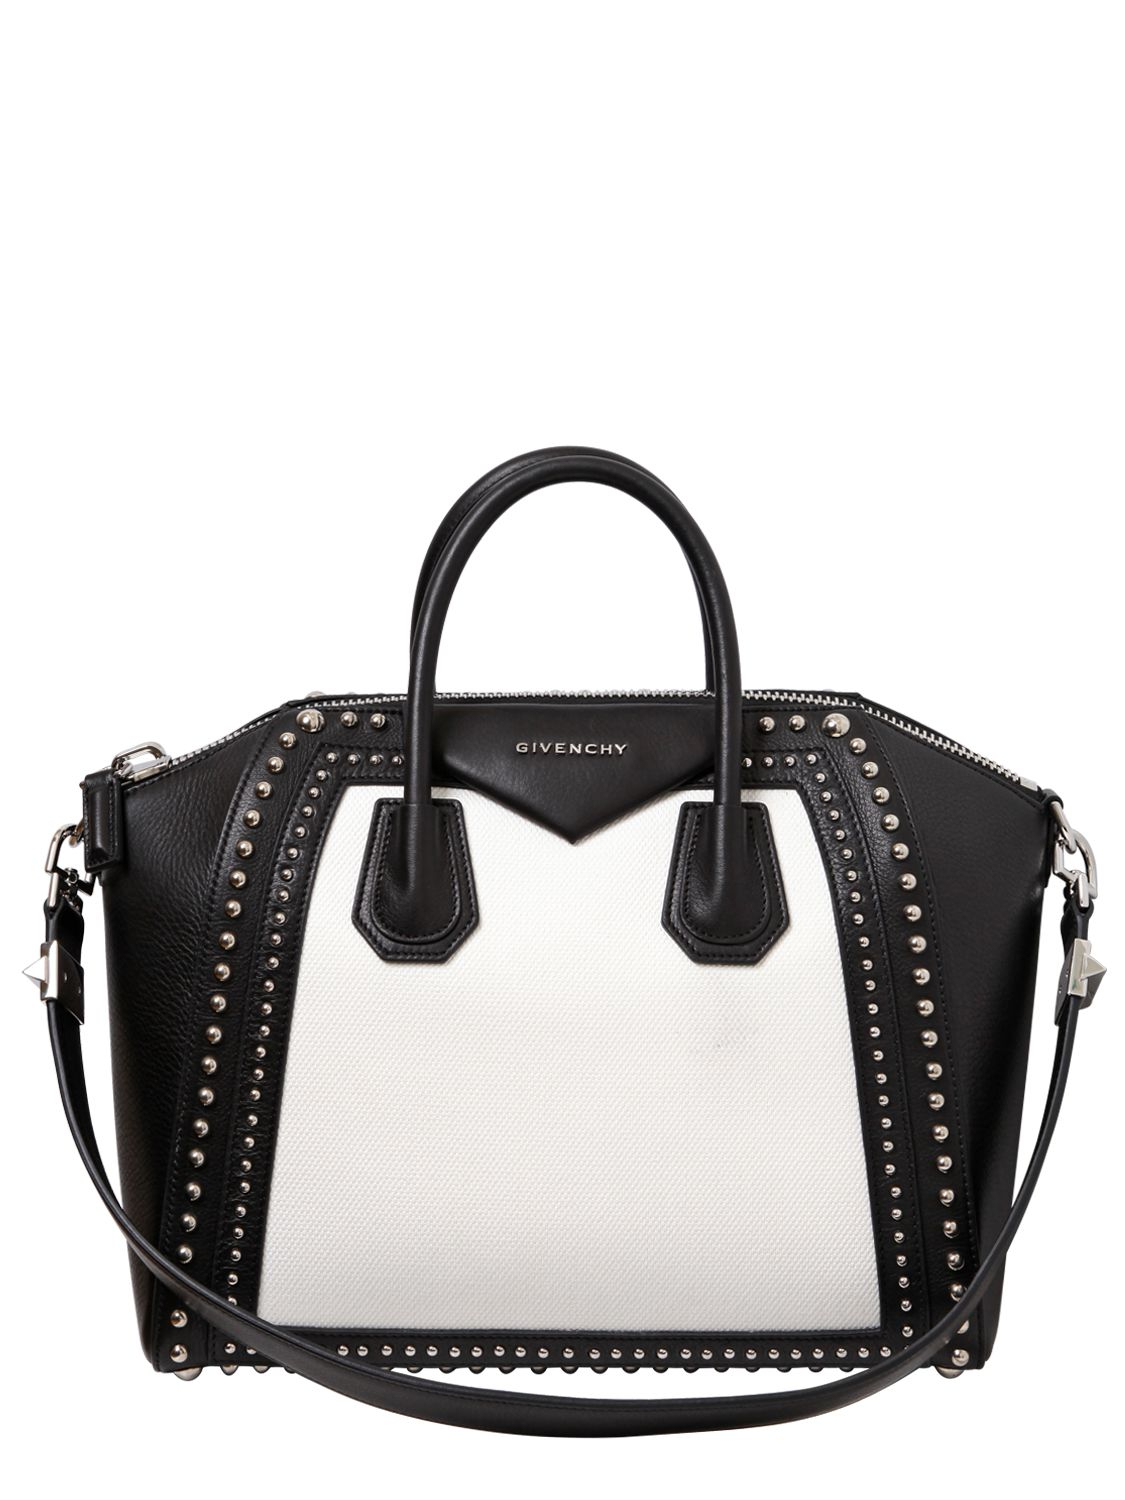 Lyst - Givenchy Medium Antigona Studded Leather Bag in White